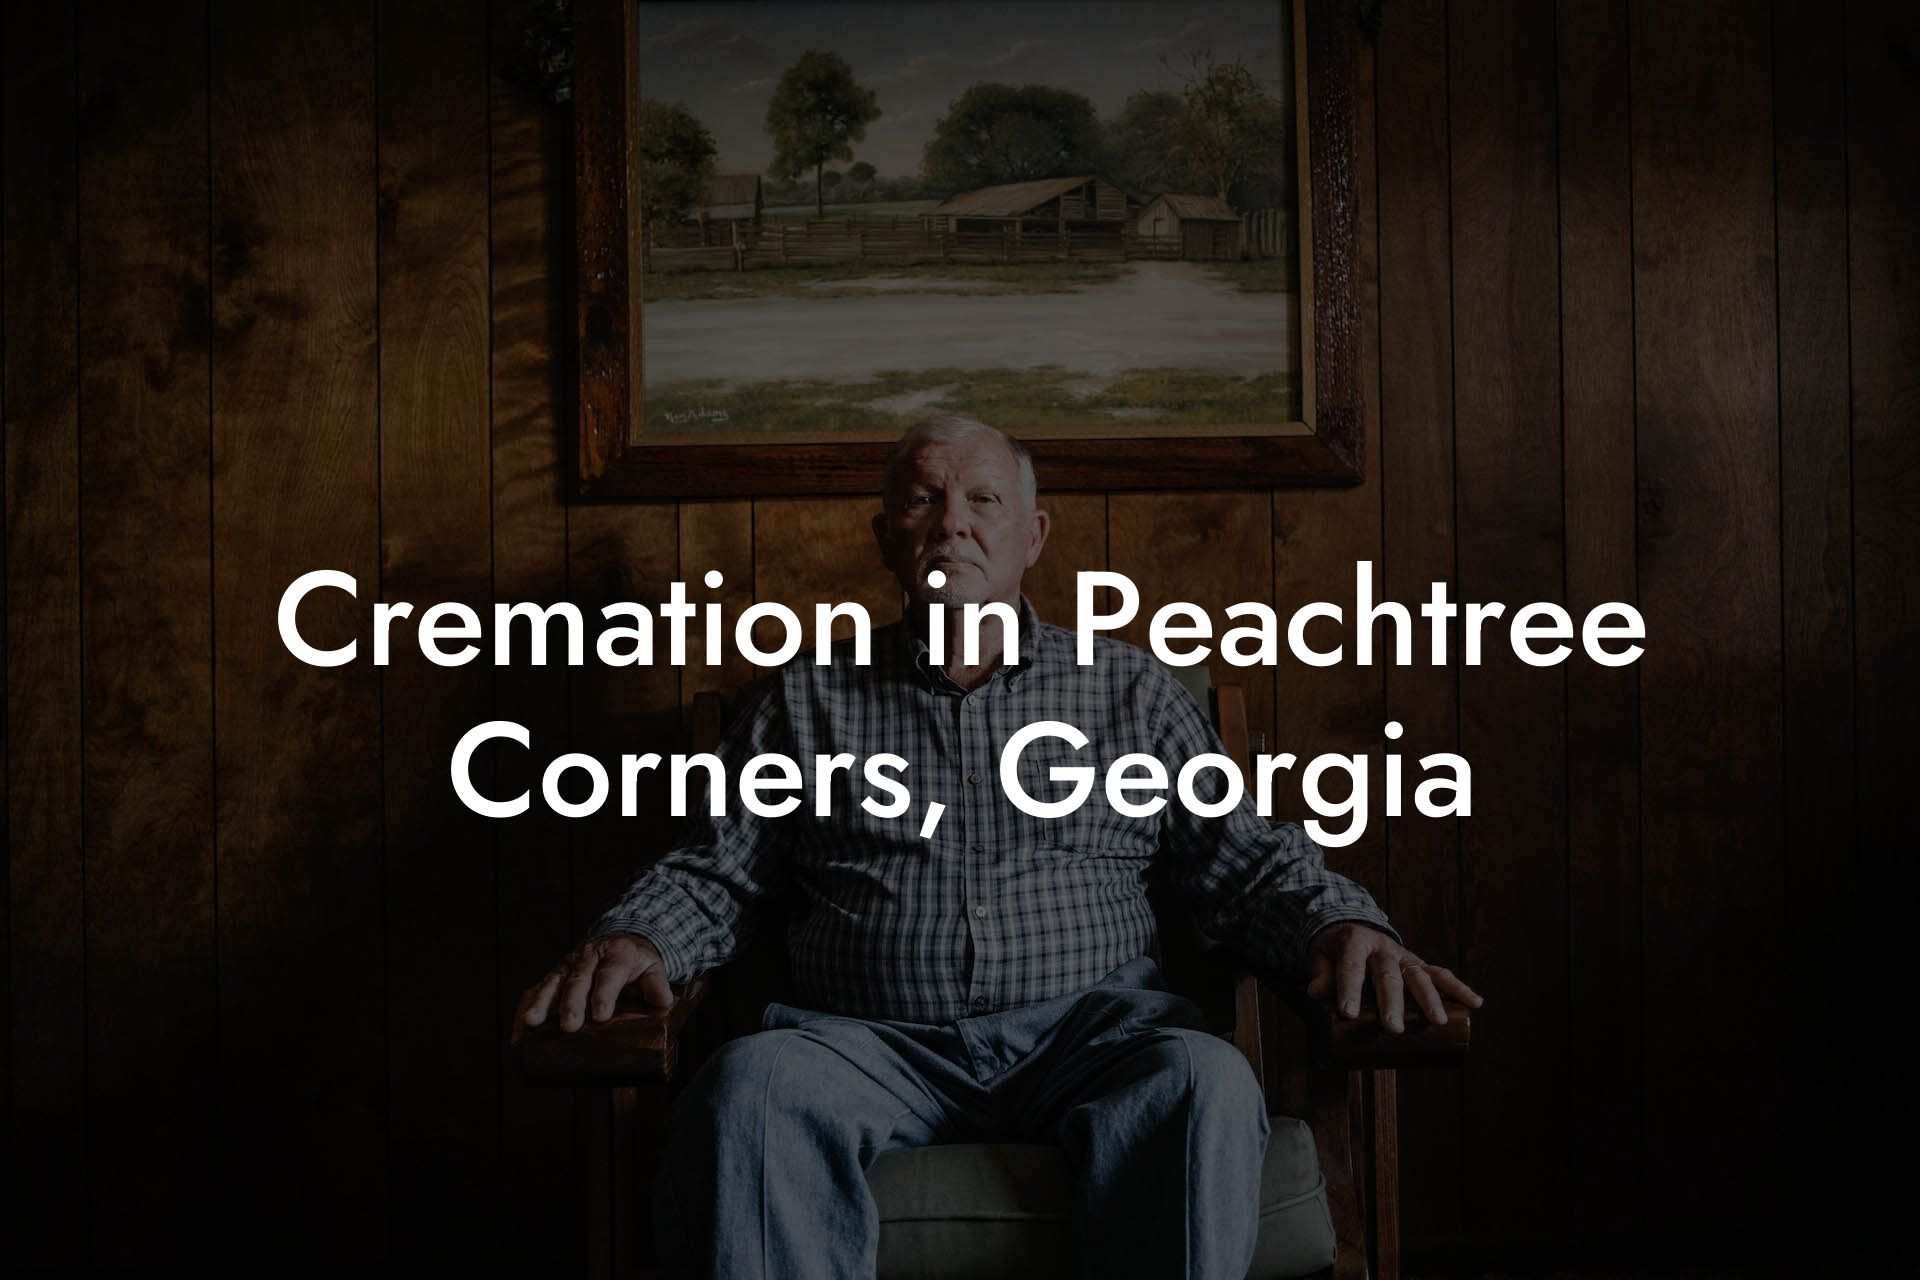 Cremation in Peachtree Corners, Georgia